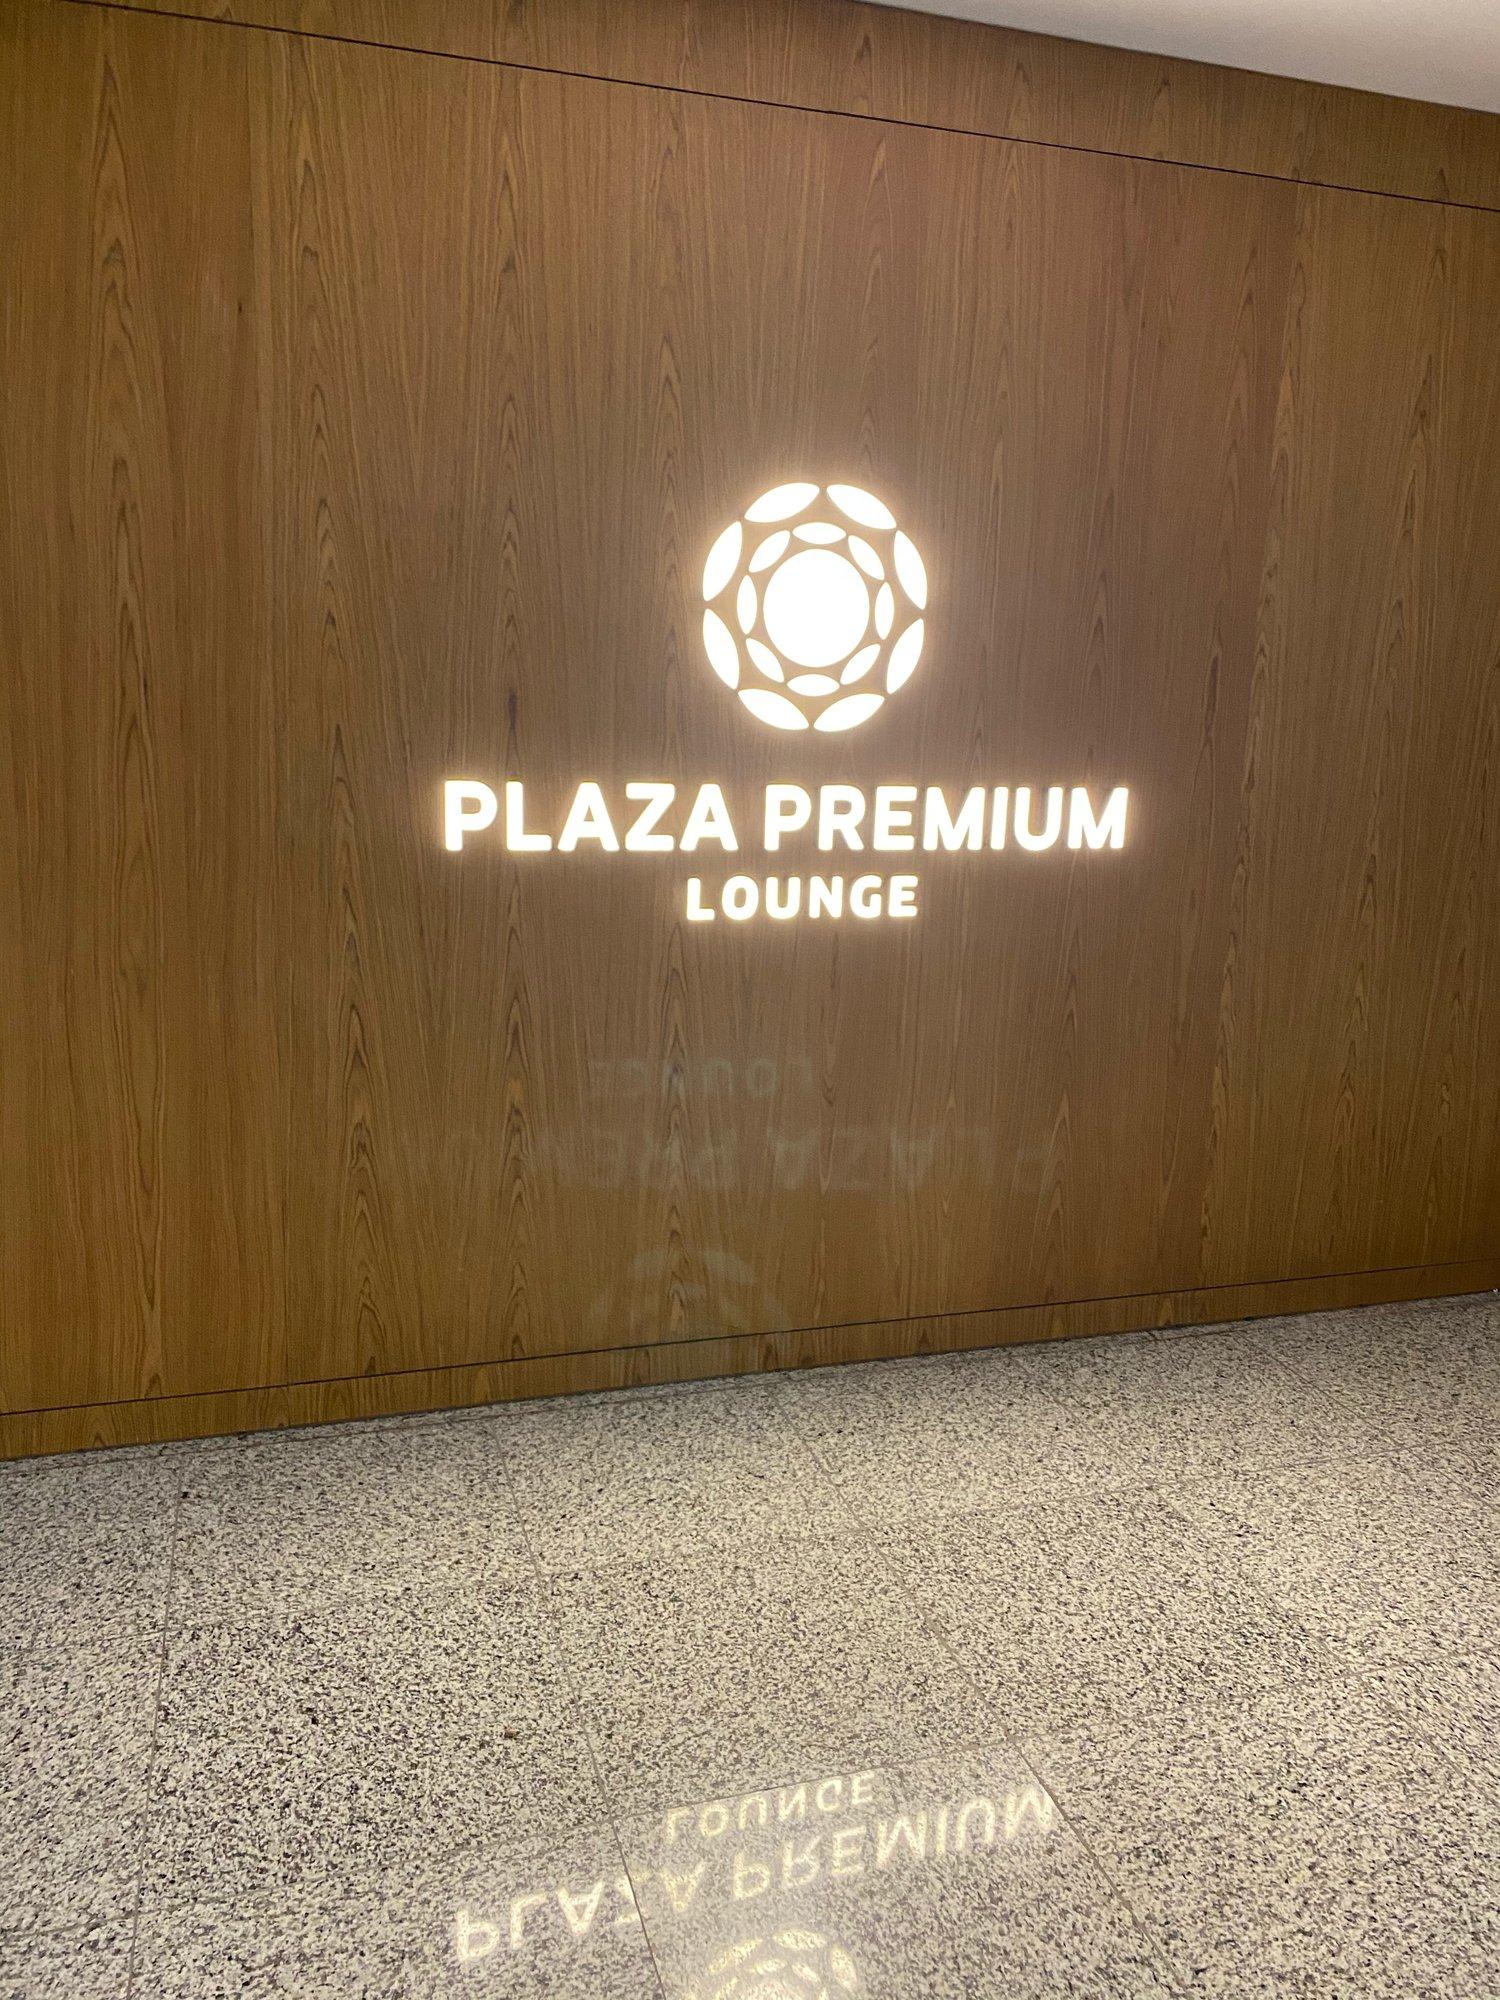 Plaza Premium Lounge (Domestic) image 19 of 38